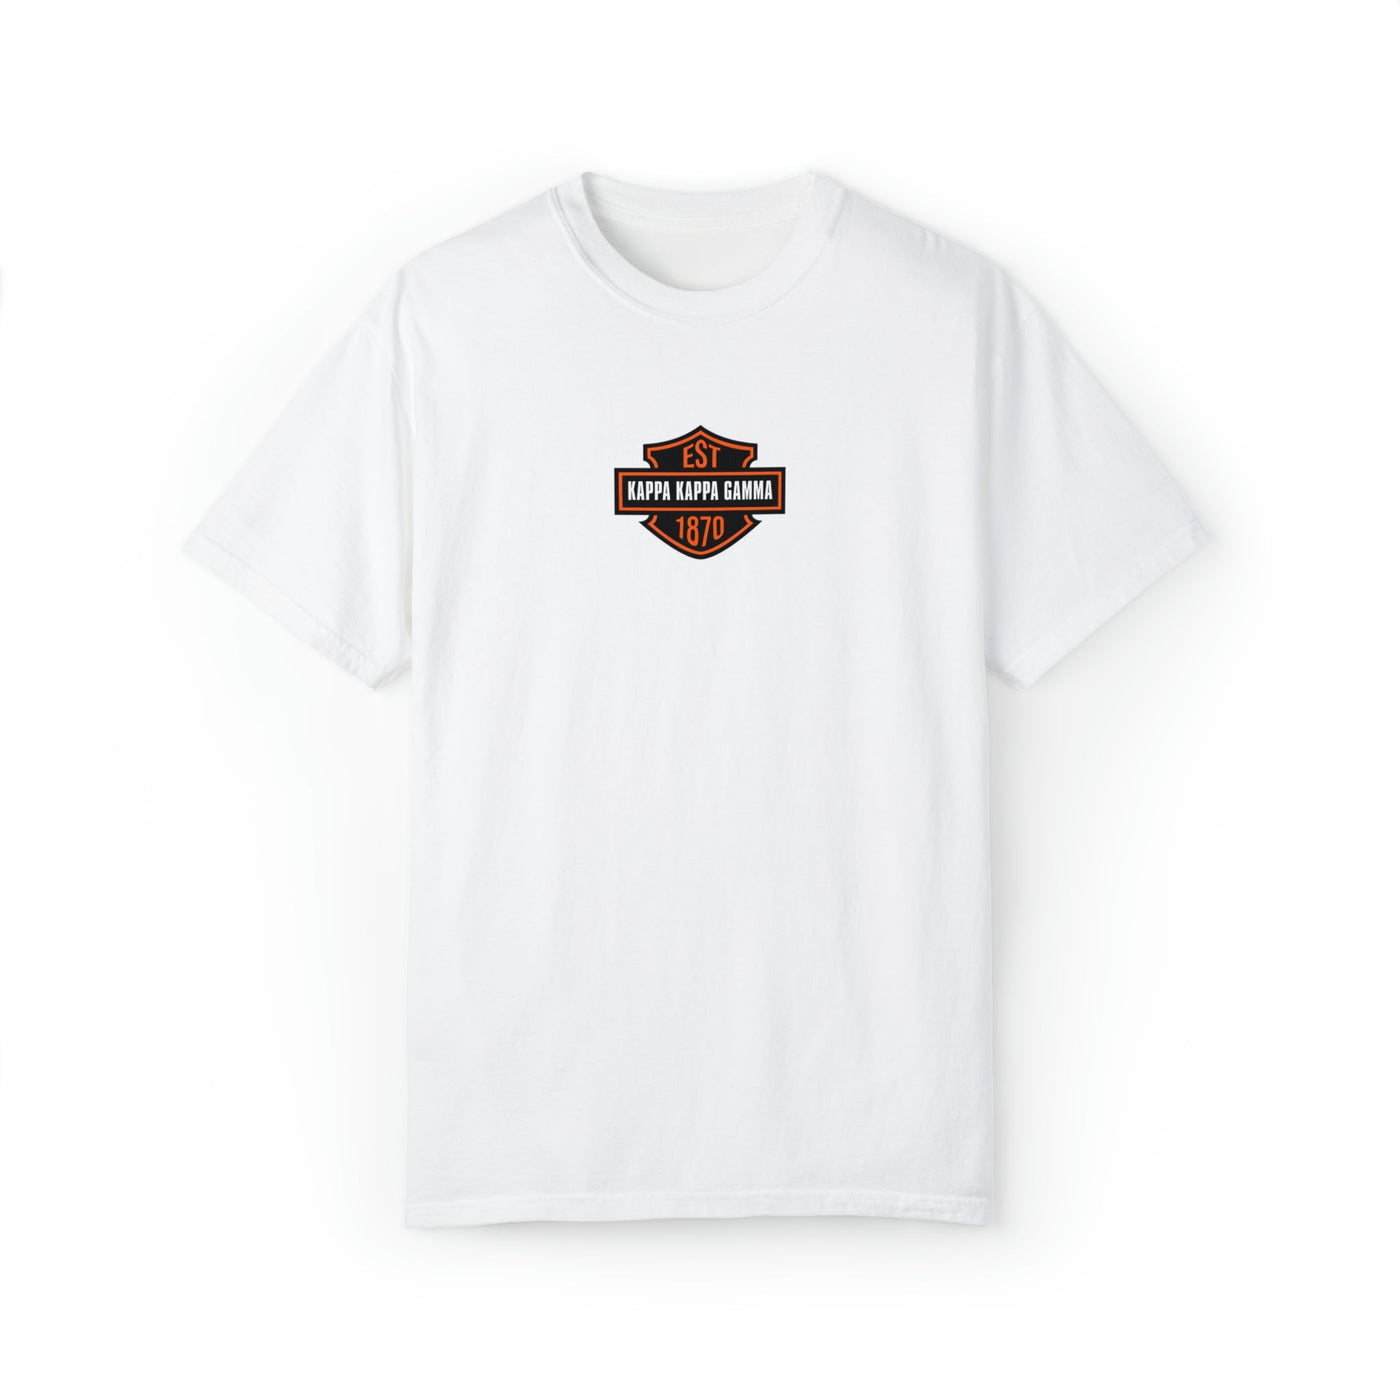 Kappa Kappa Gamma Motorcycle Inspired Sorority T-shirt